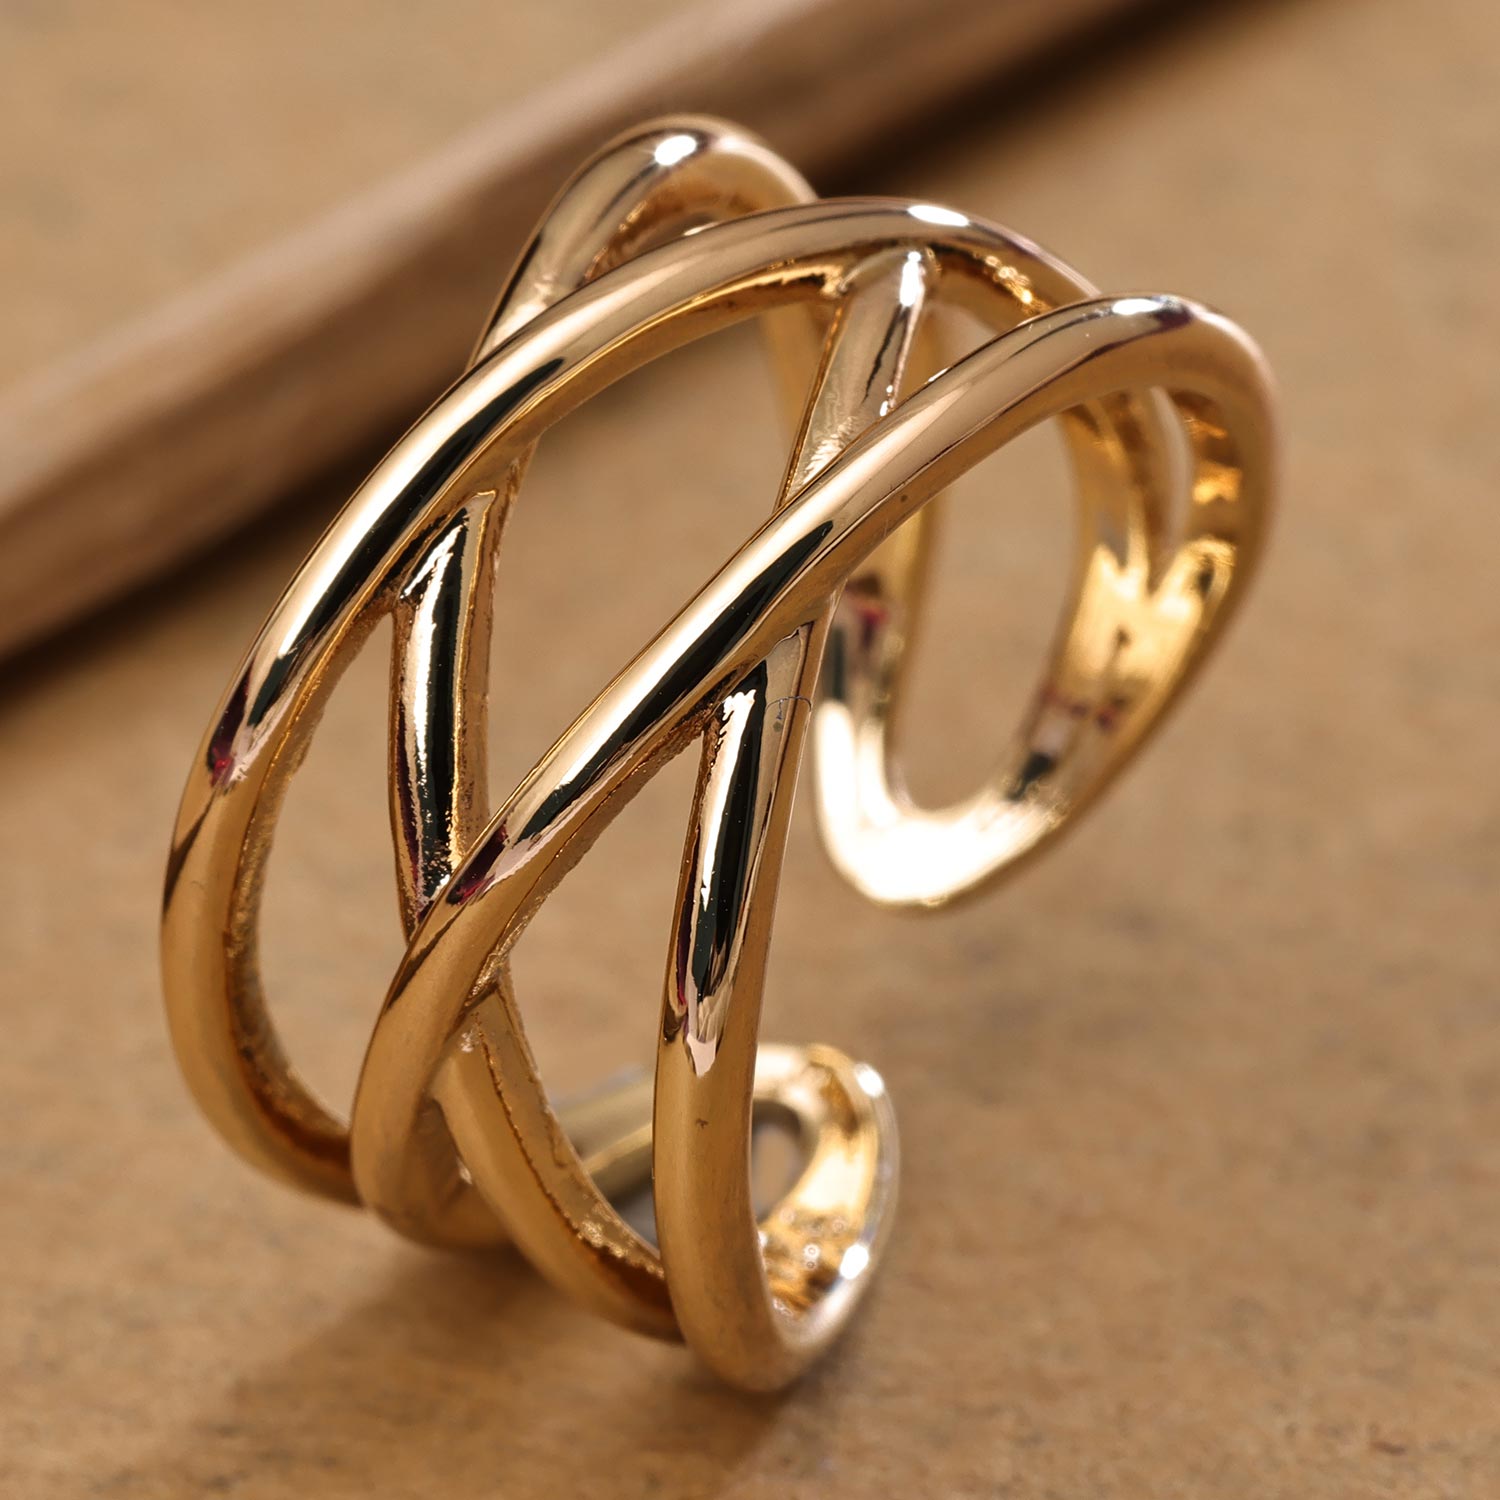 Mixed Metal Ring Sets | Gold plated rings, Mixed metal rings, Gold ring sets